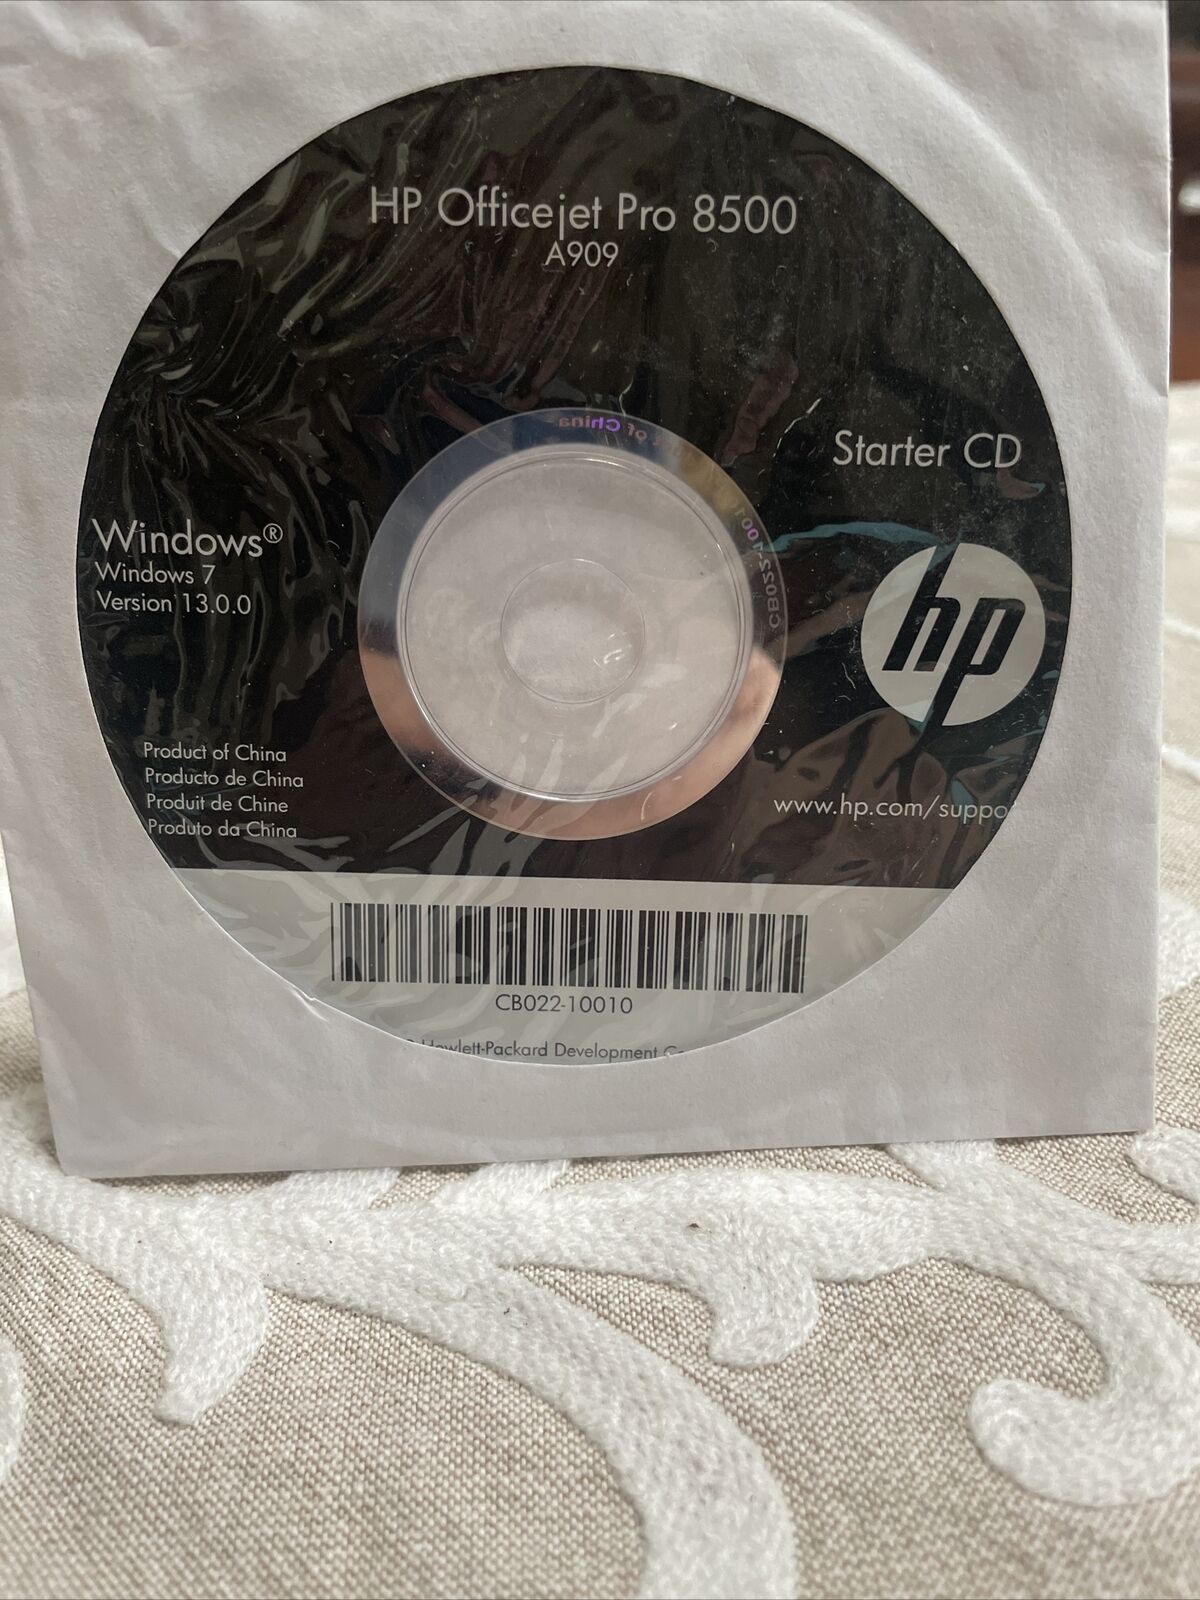 HP Officejet Pro 8500 A909 Windows 7 Version 13.0.0 Starter CD Software install